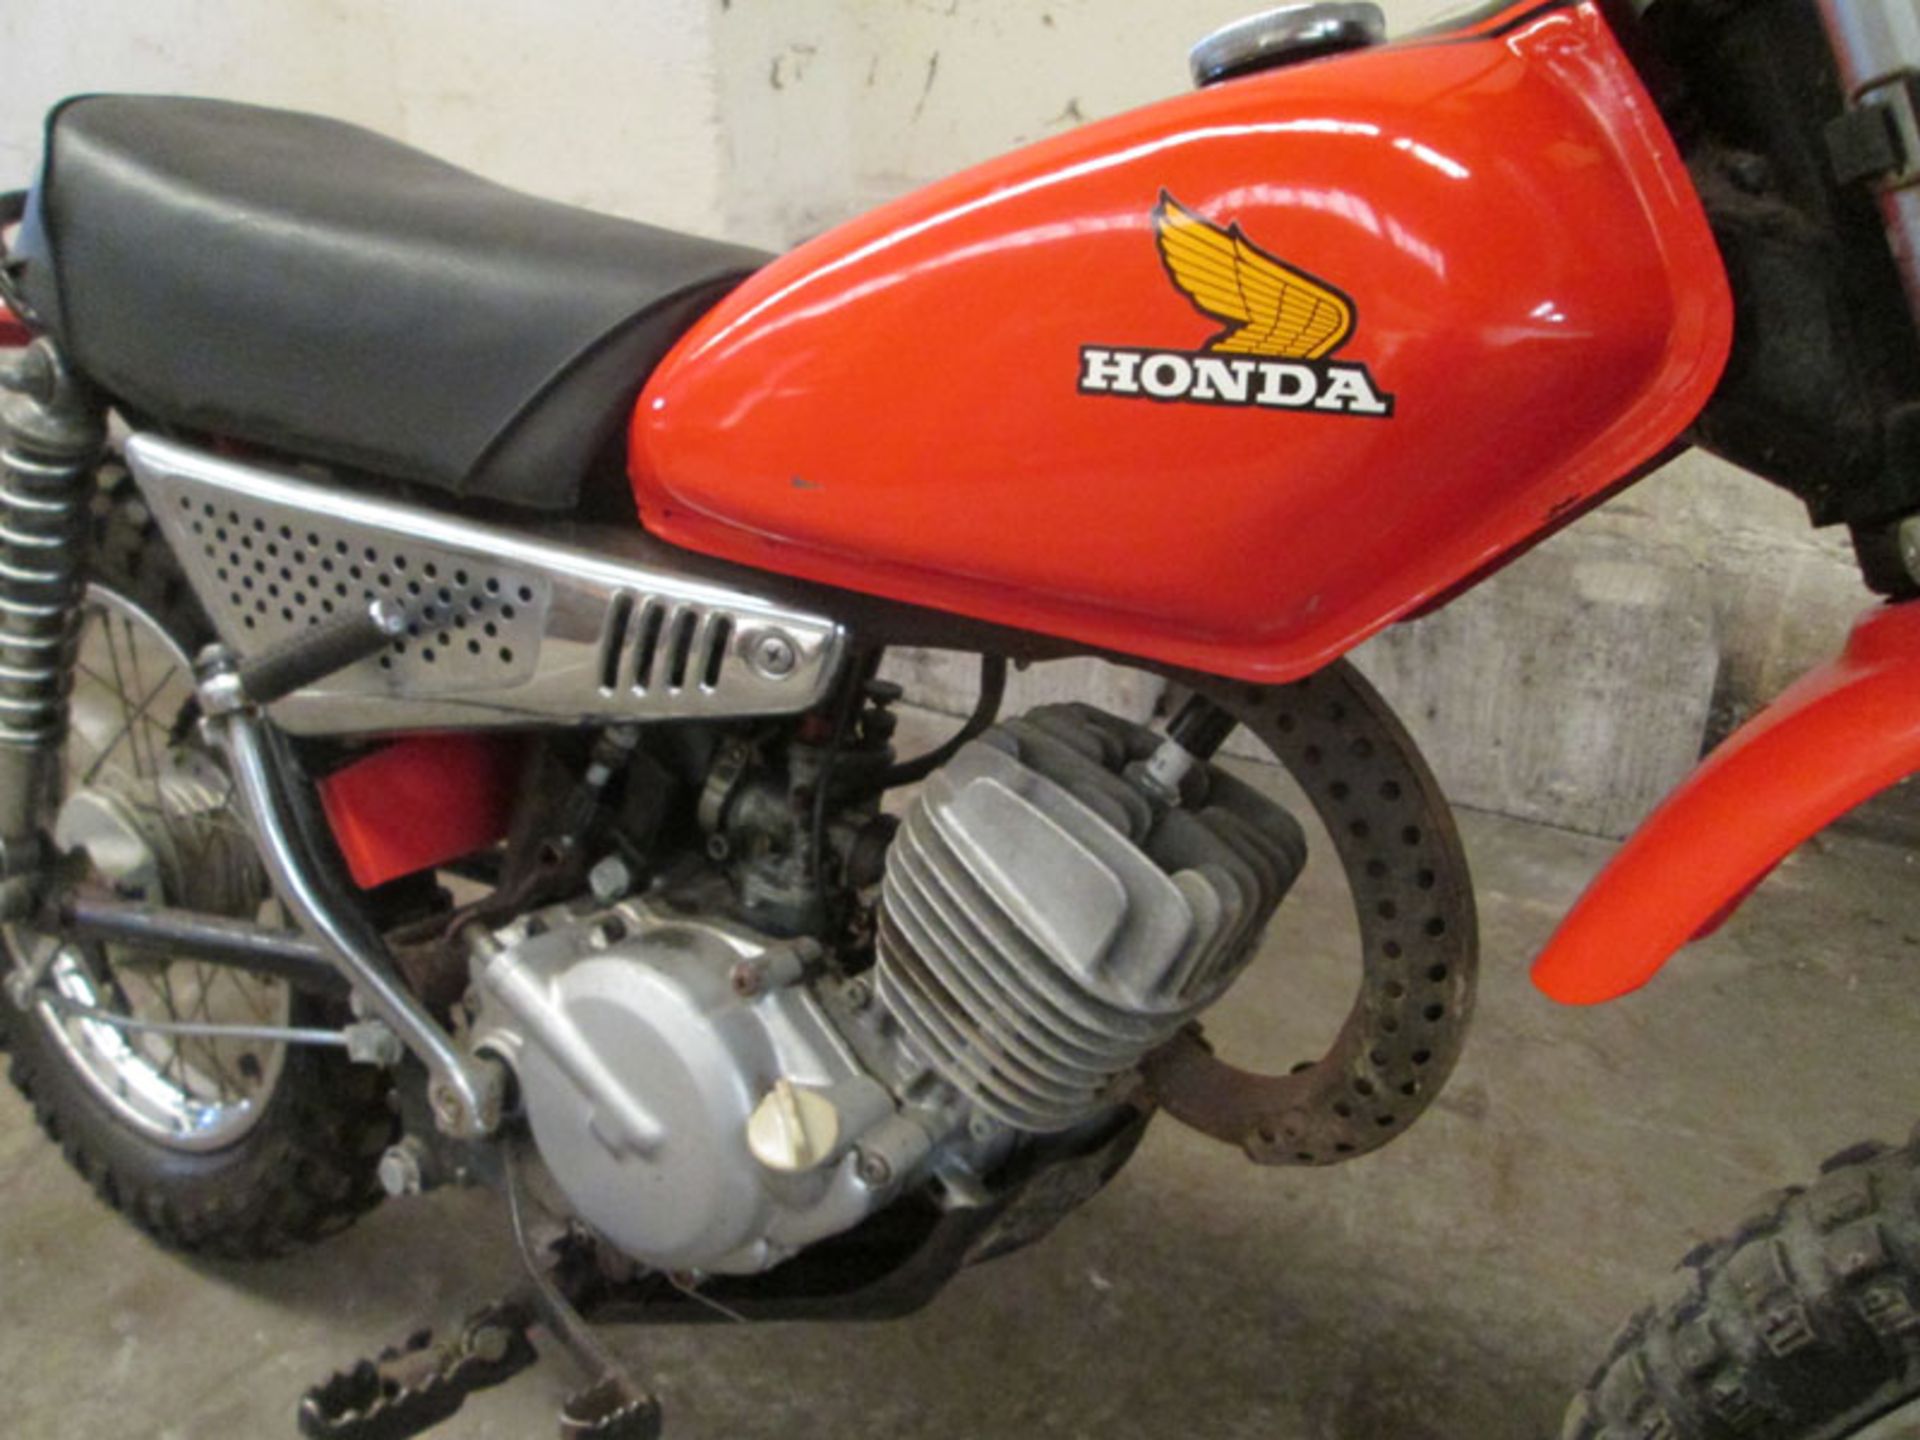 1974 Honda MR50 - Image 2 of 3